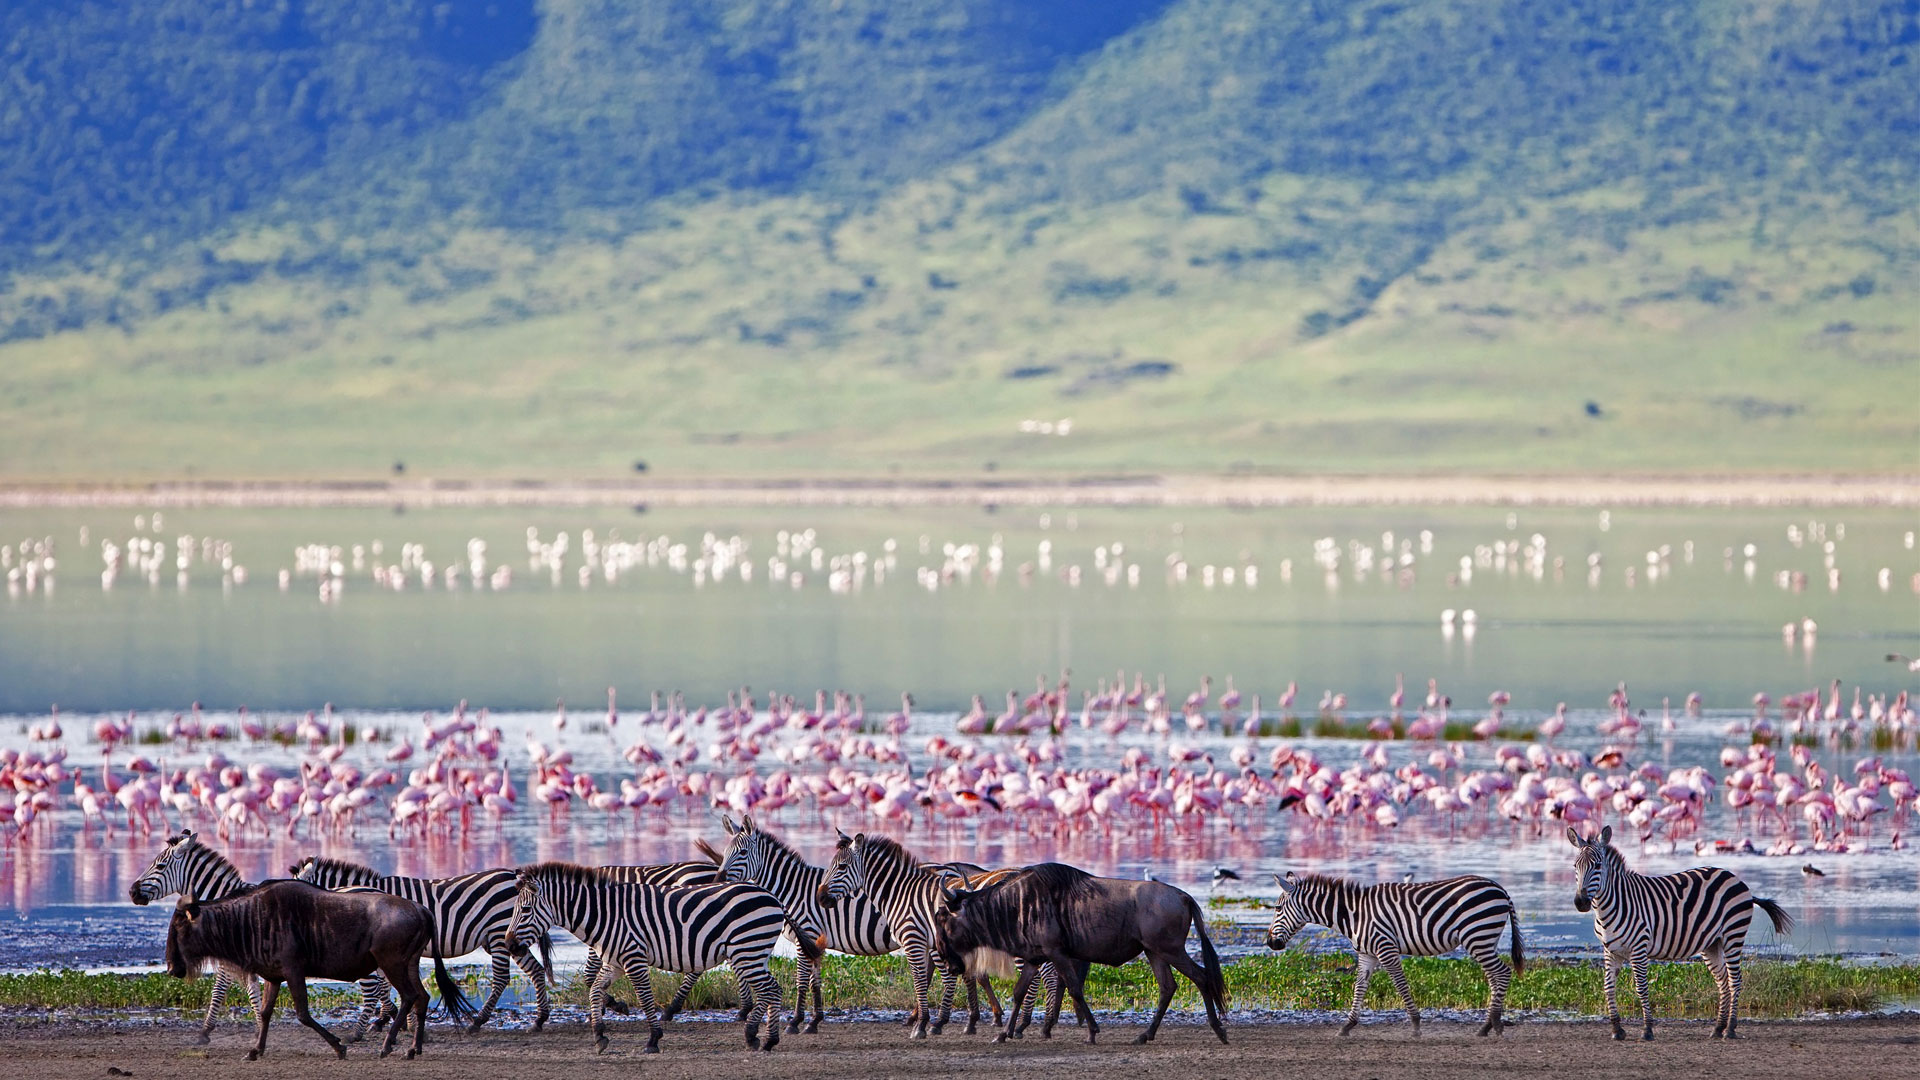 Serengeti vs Masai Mara - The Best Safari Destination Revealed